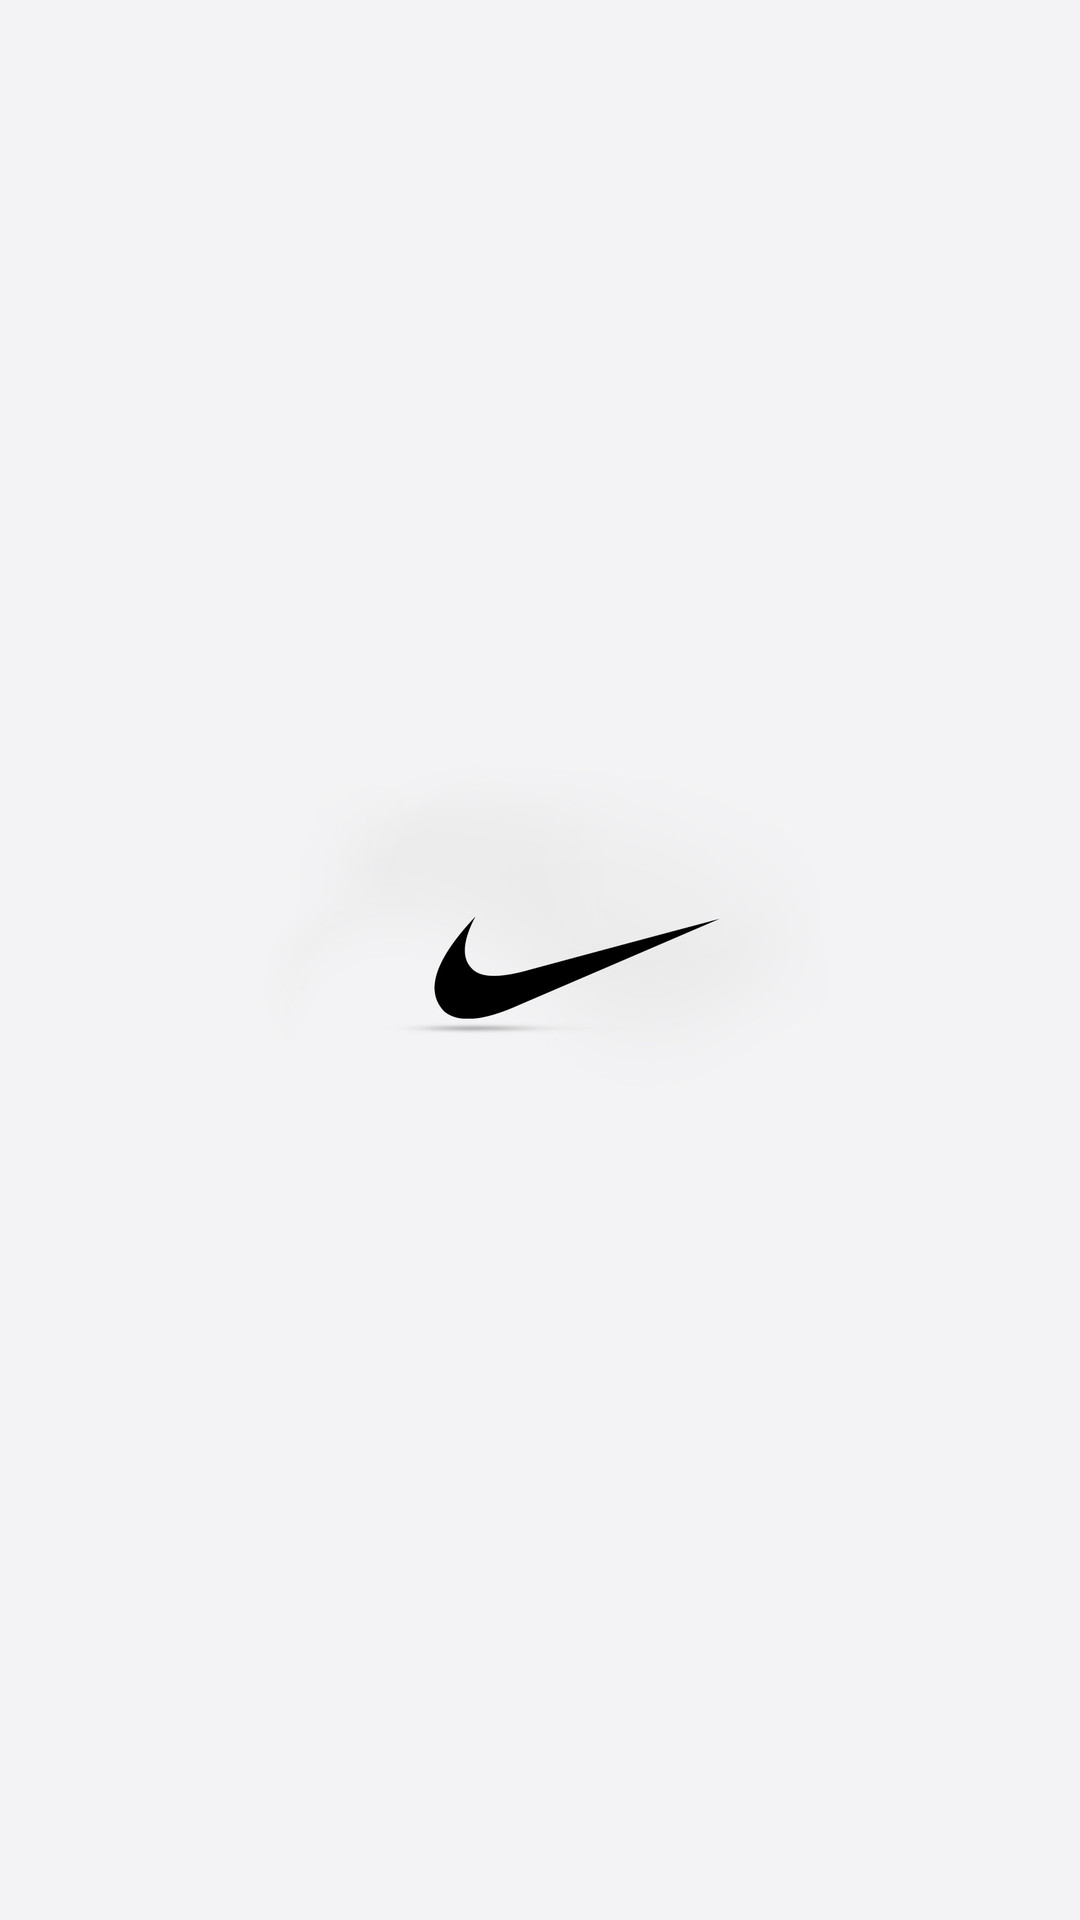 1080x1920 Logo Wallpaper Nike photos of Nike iPhone Wallpaper: Here we have .